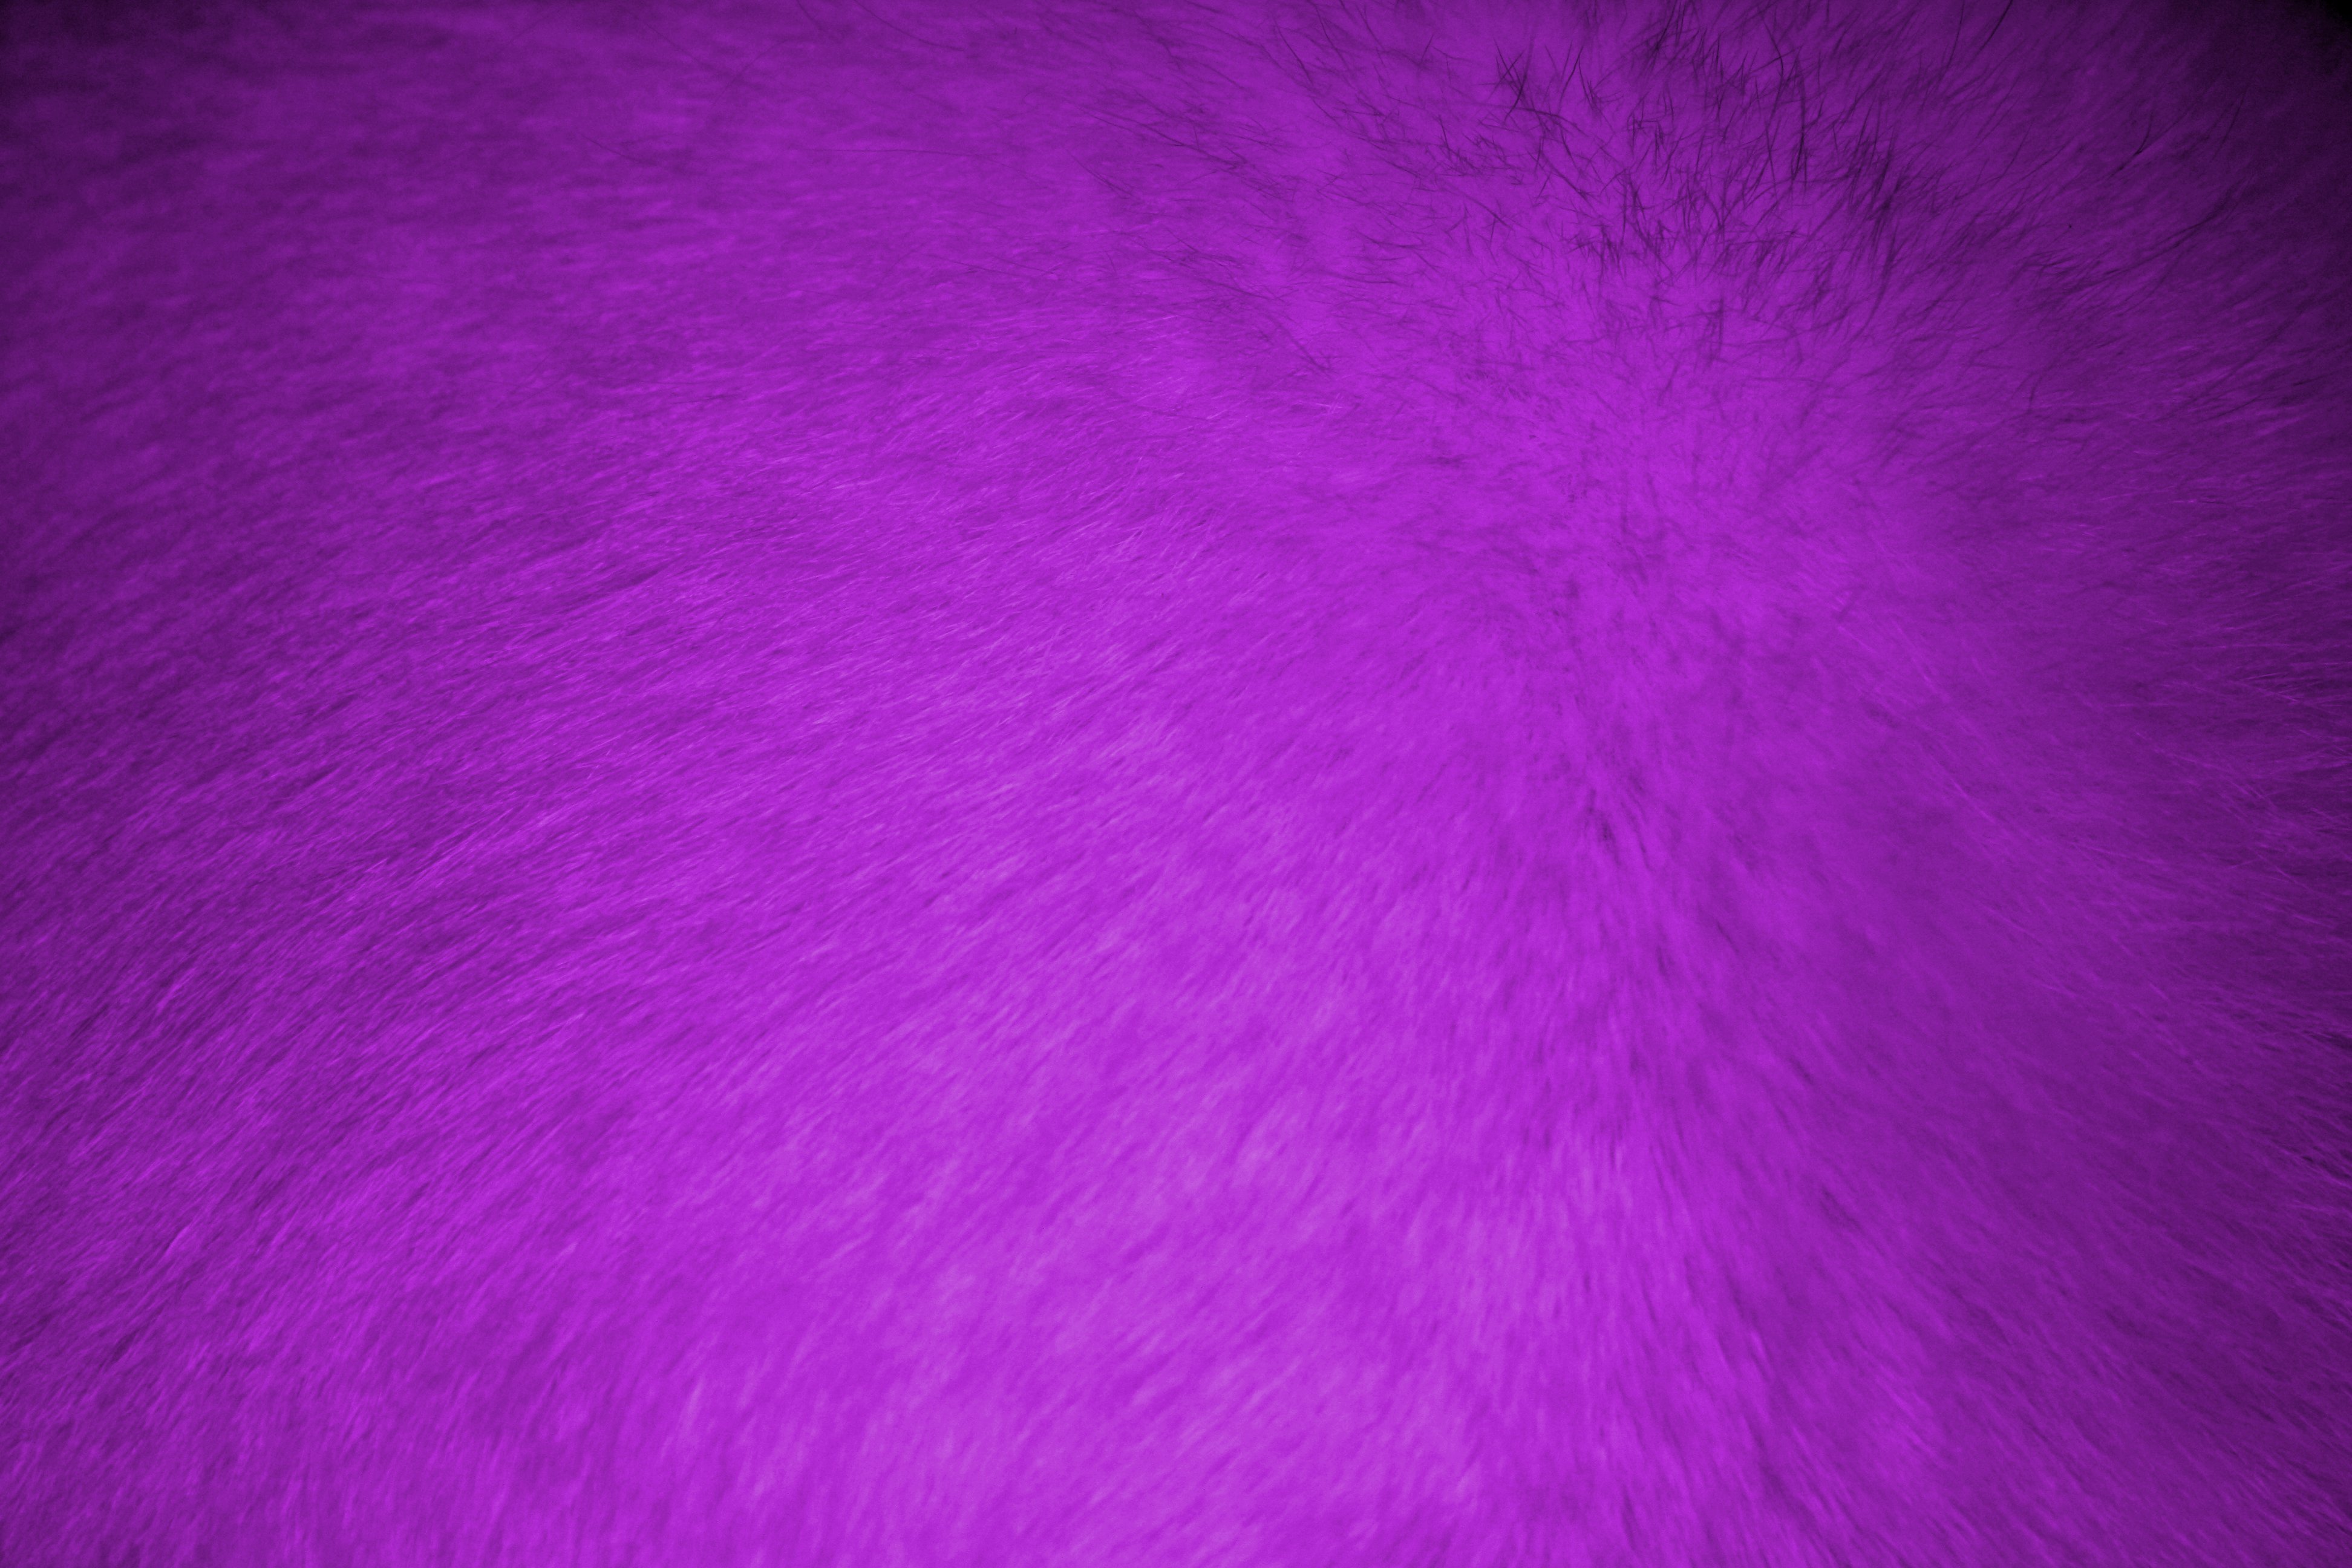 Purple Fur Texture High Resolution Photo Dimensions